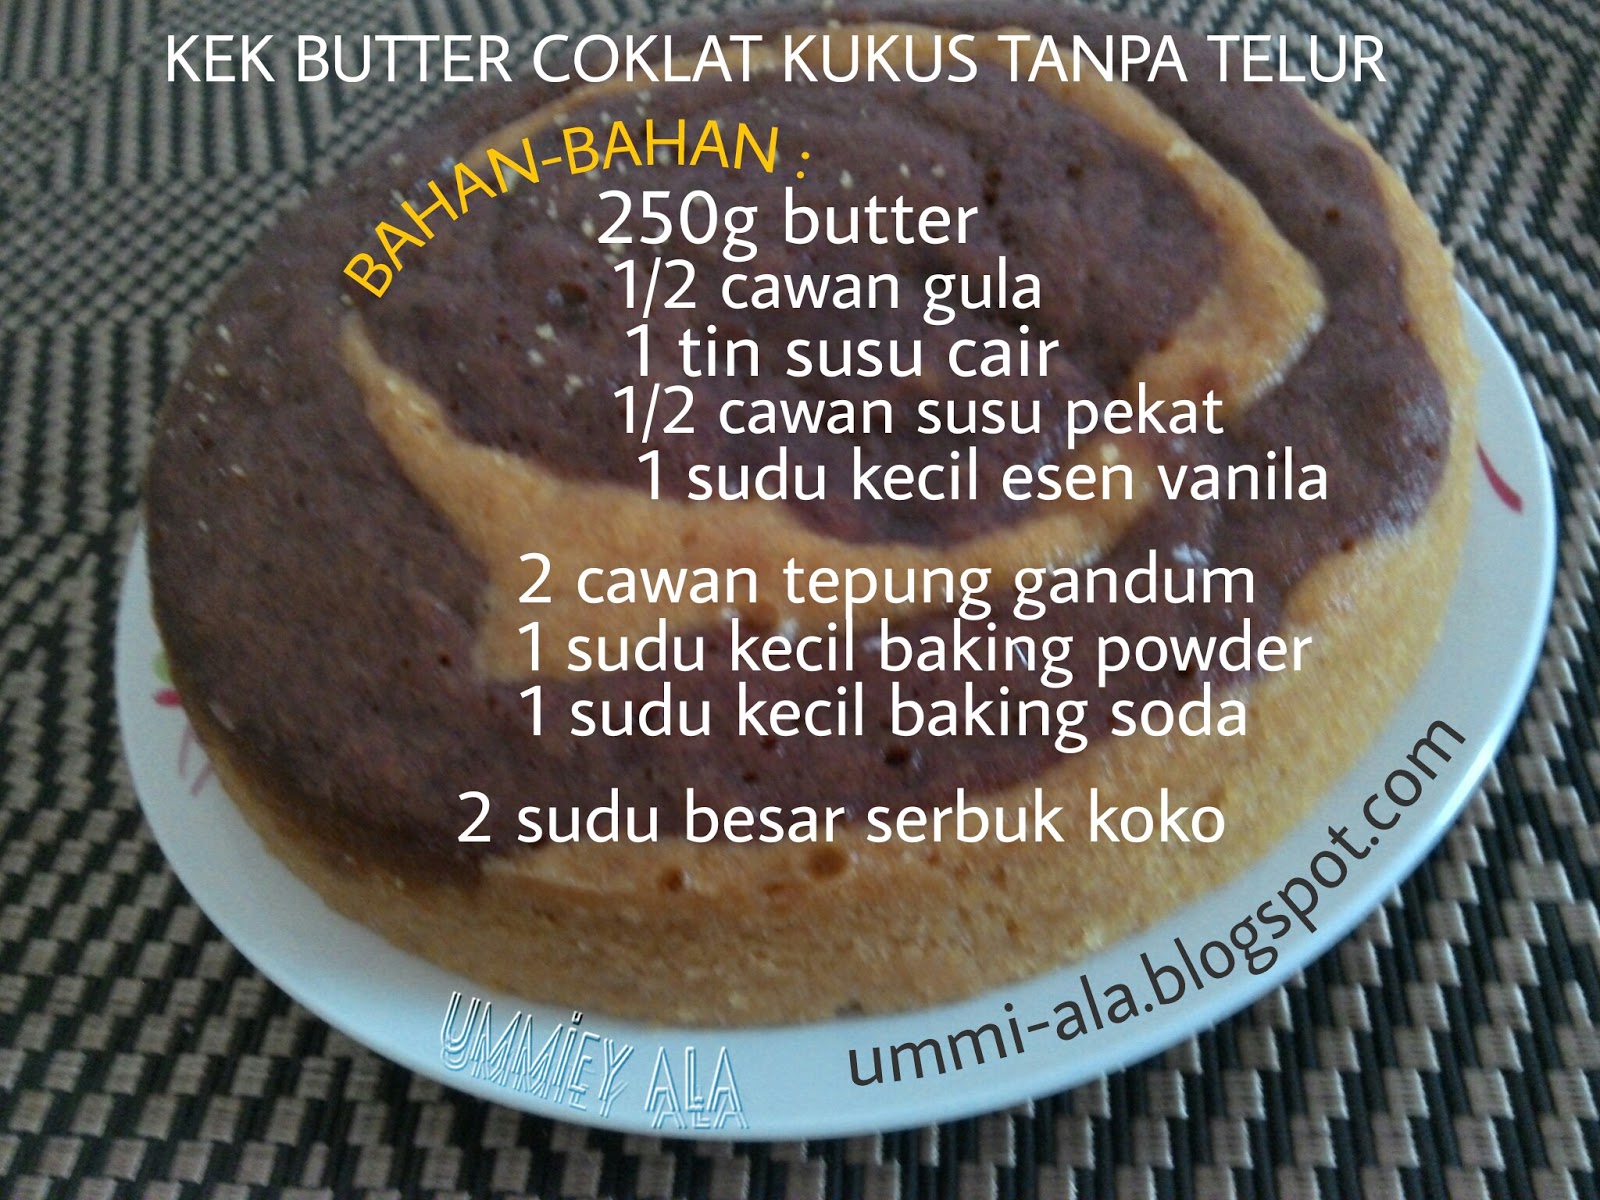 UMMiey aLa: kek butter coklat kukus tanpa telur